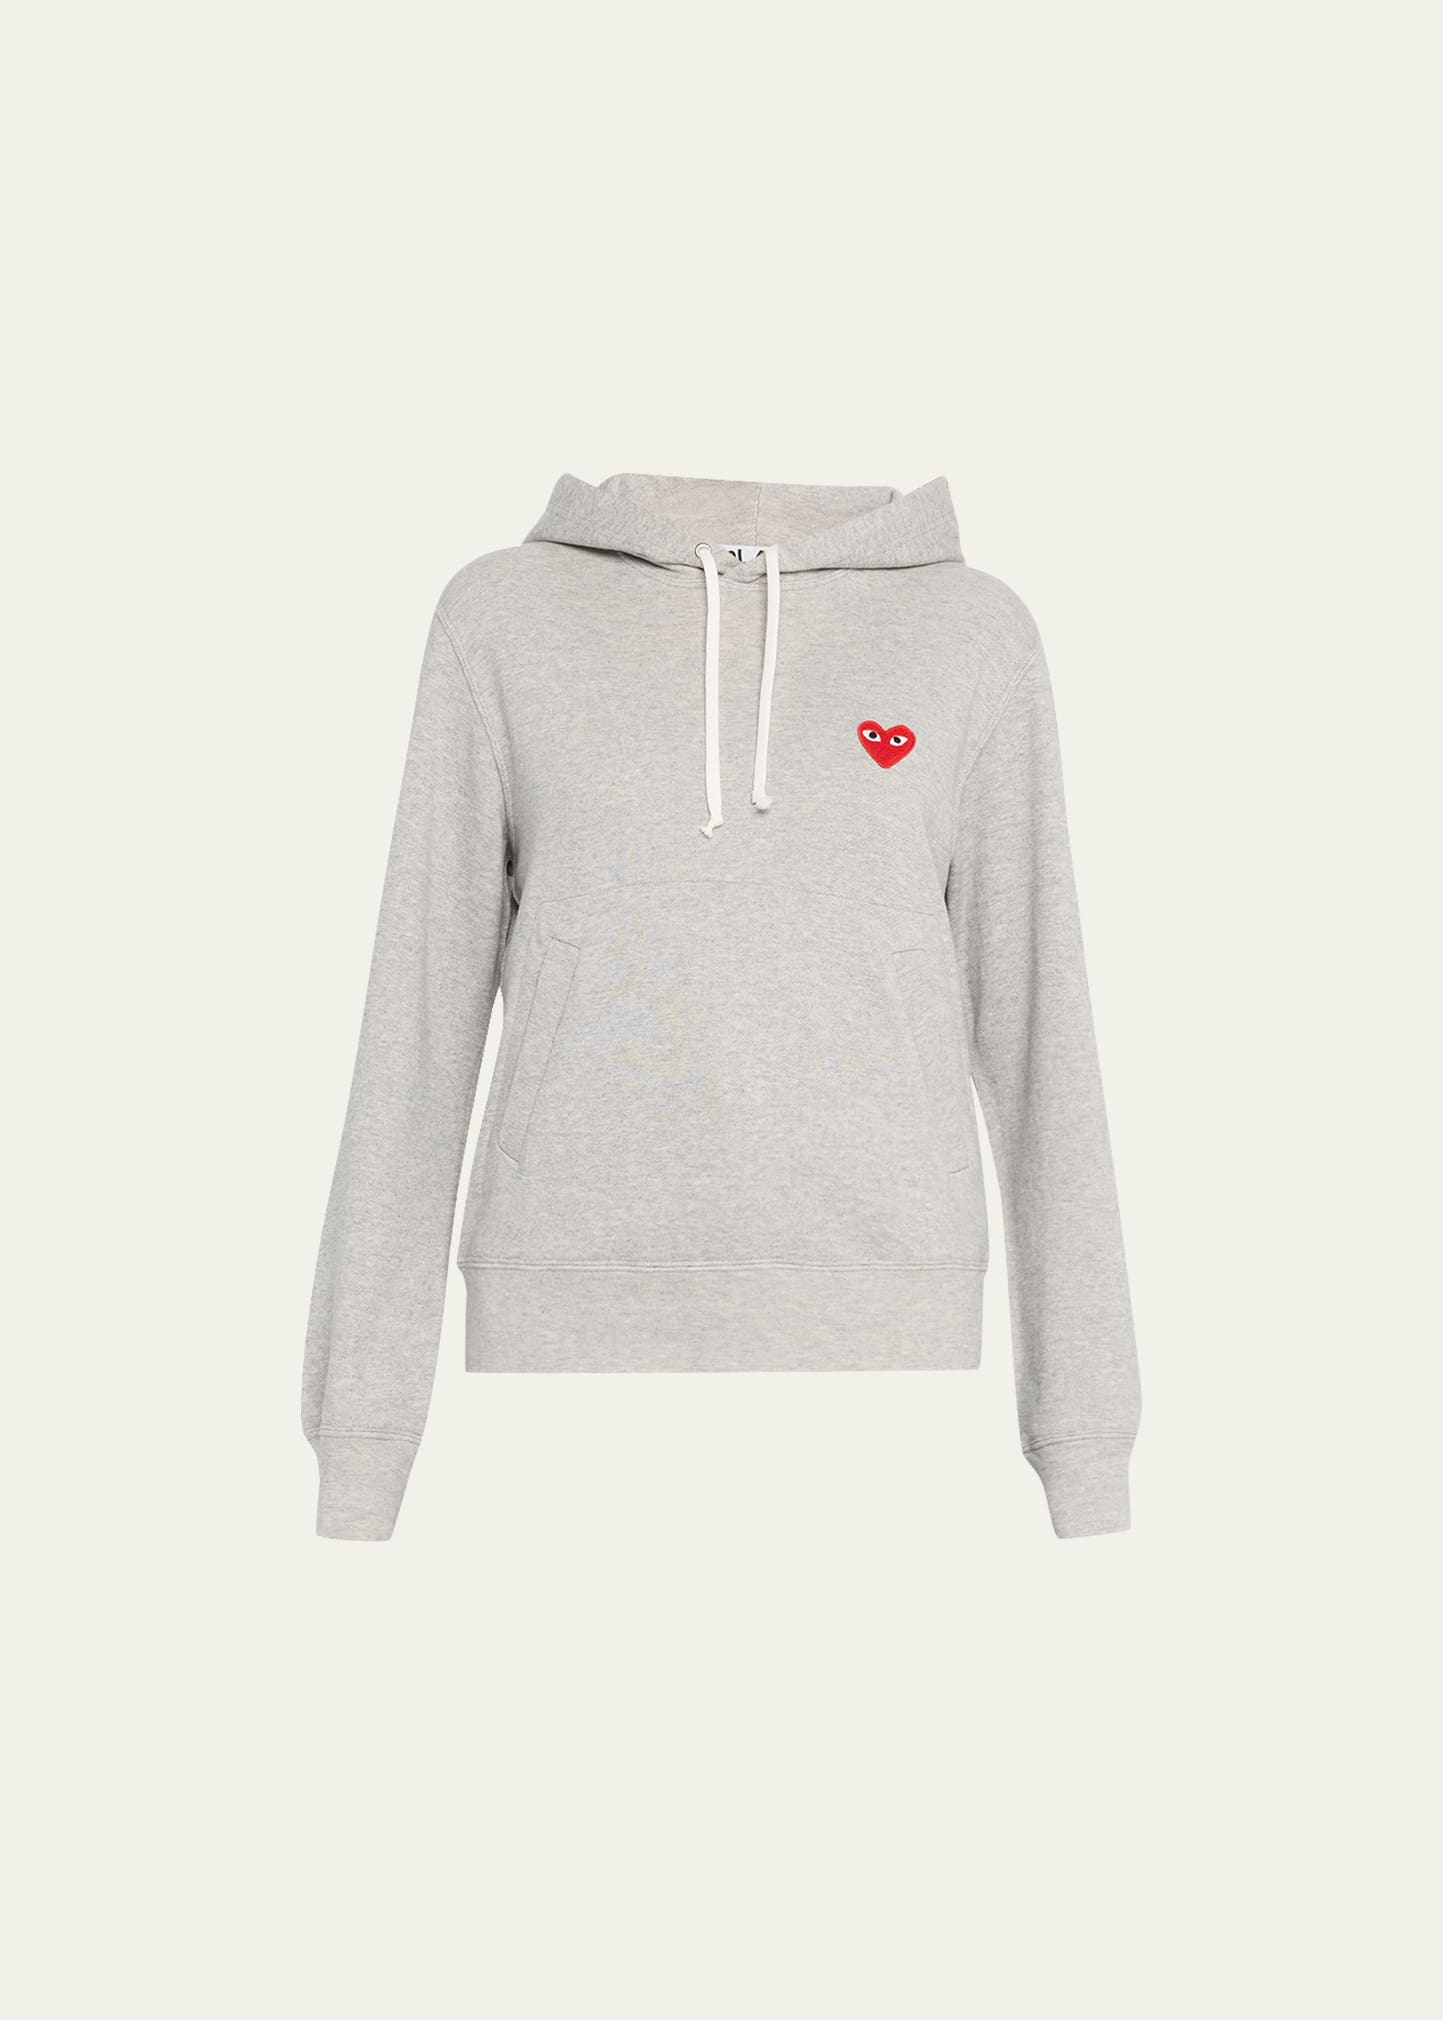 Cdg Play Hooded Sweatshirt With Heart Logo Detail In Grey